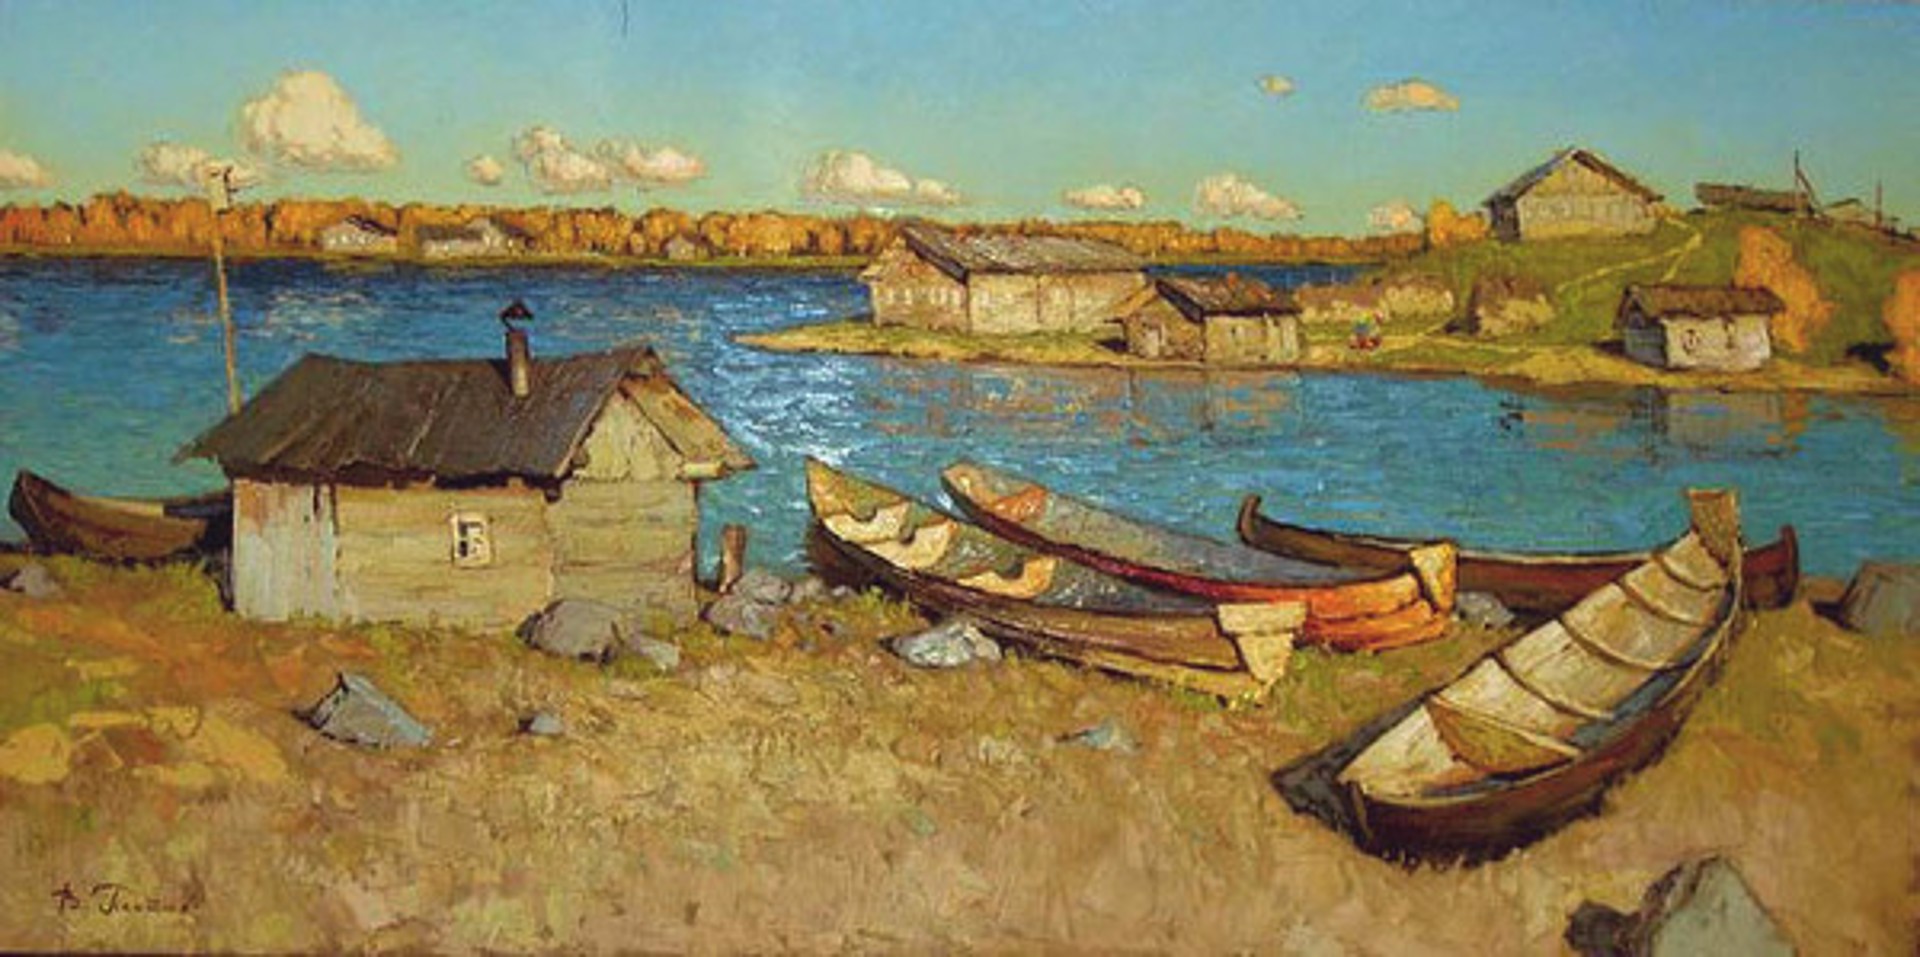 On the Lake by Vladimir Pentjuh